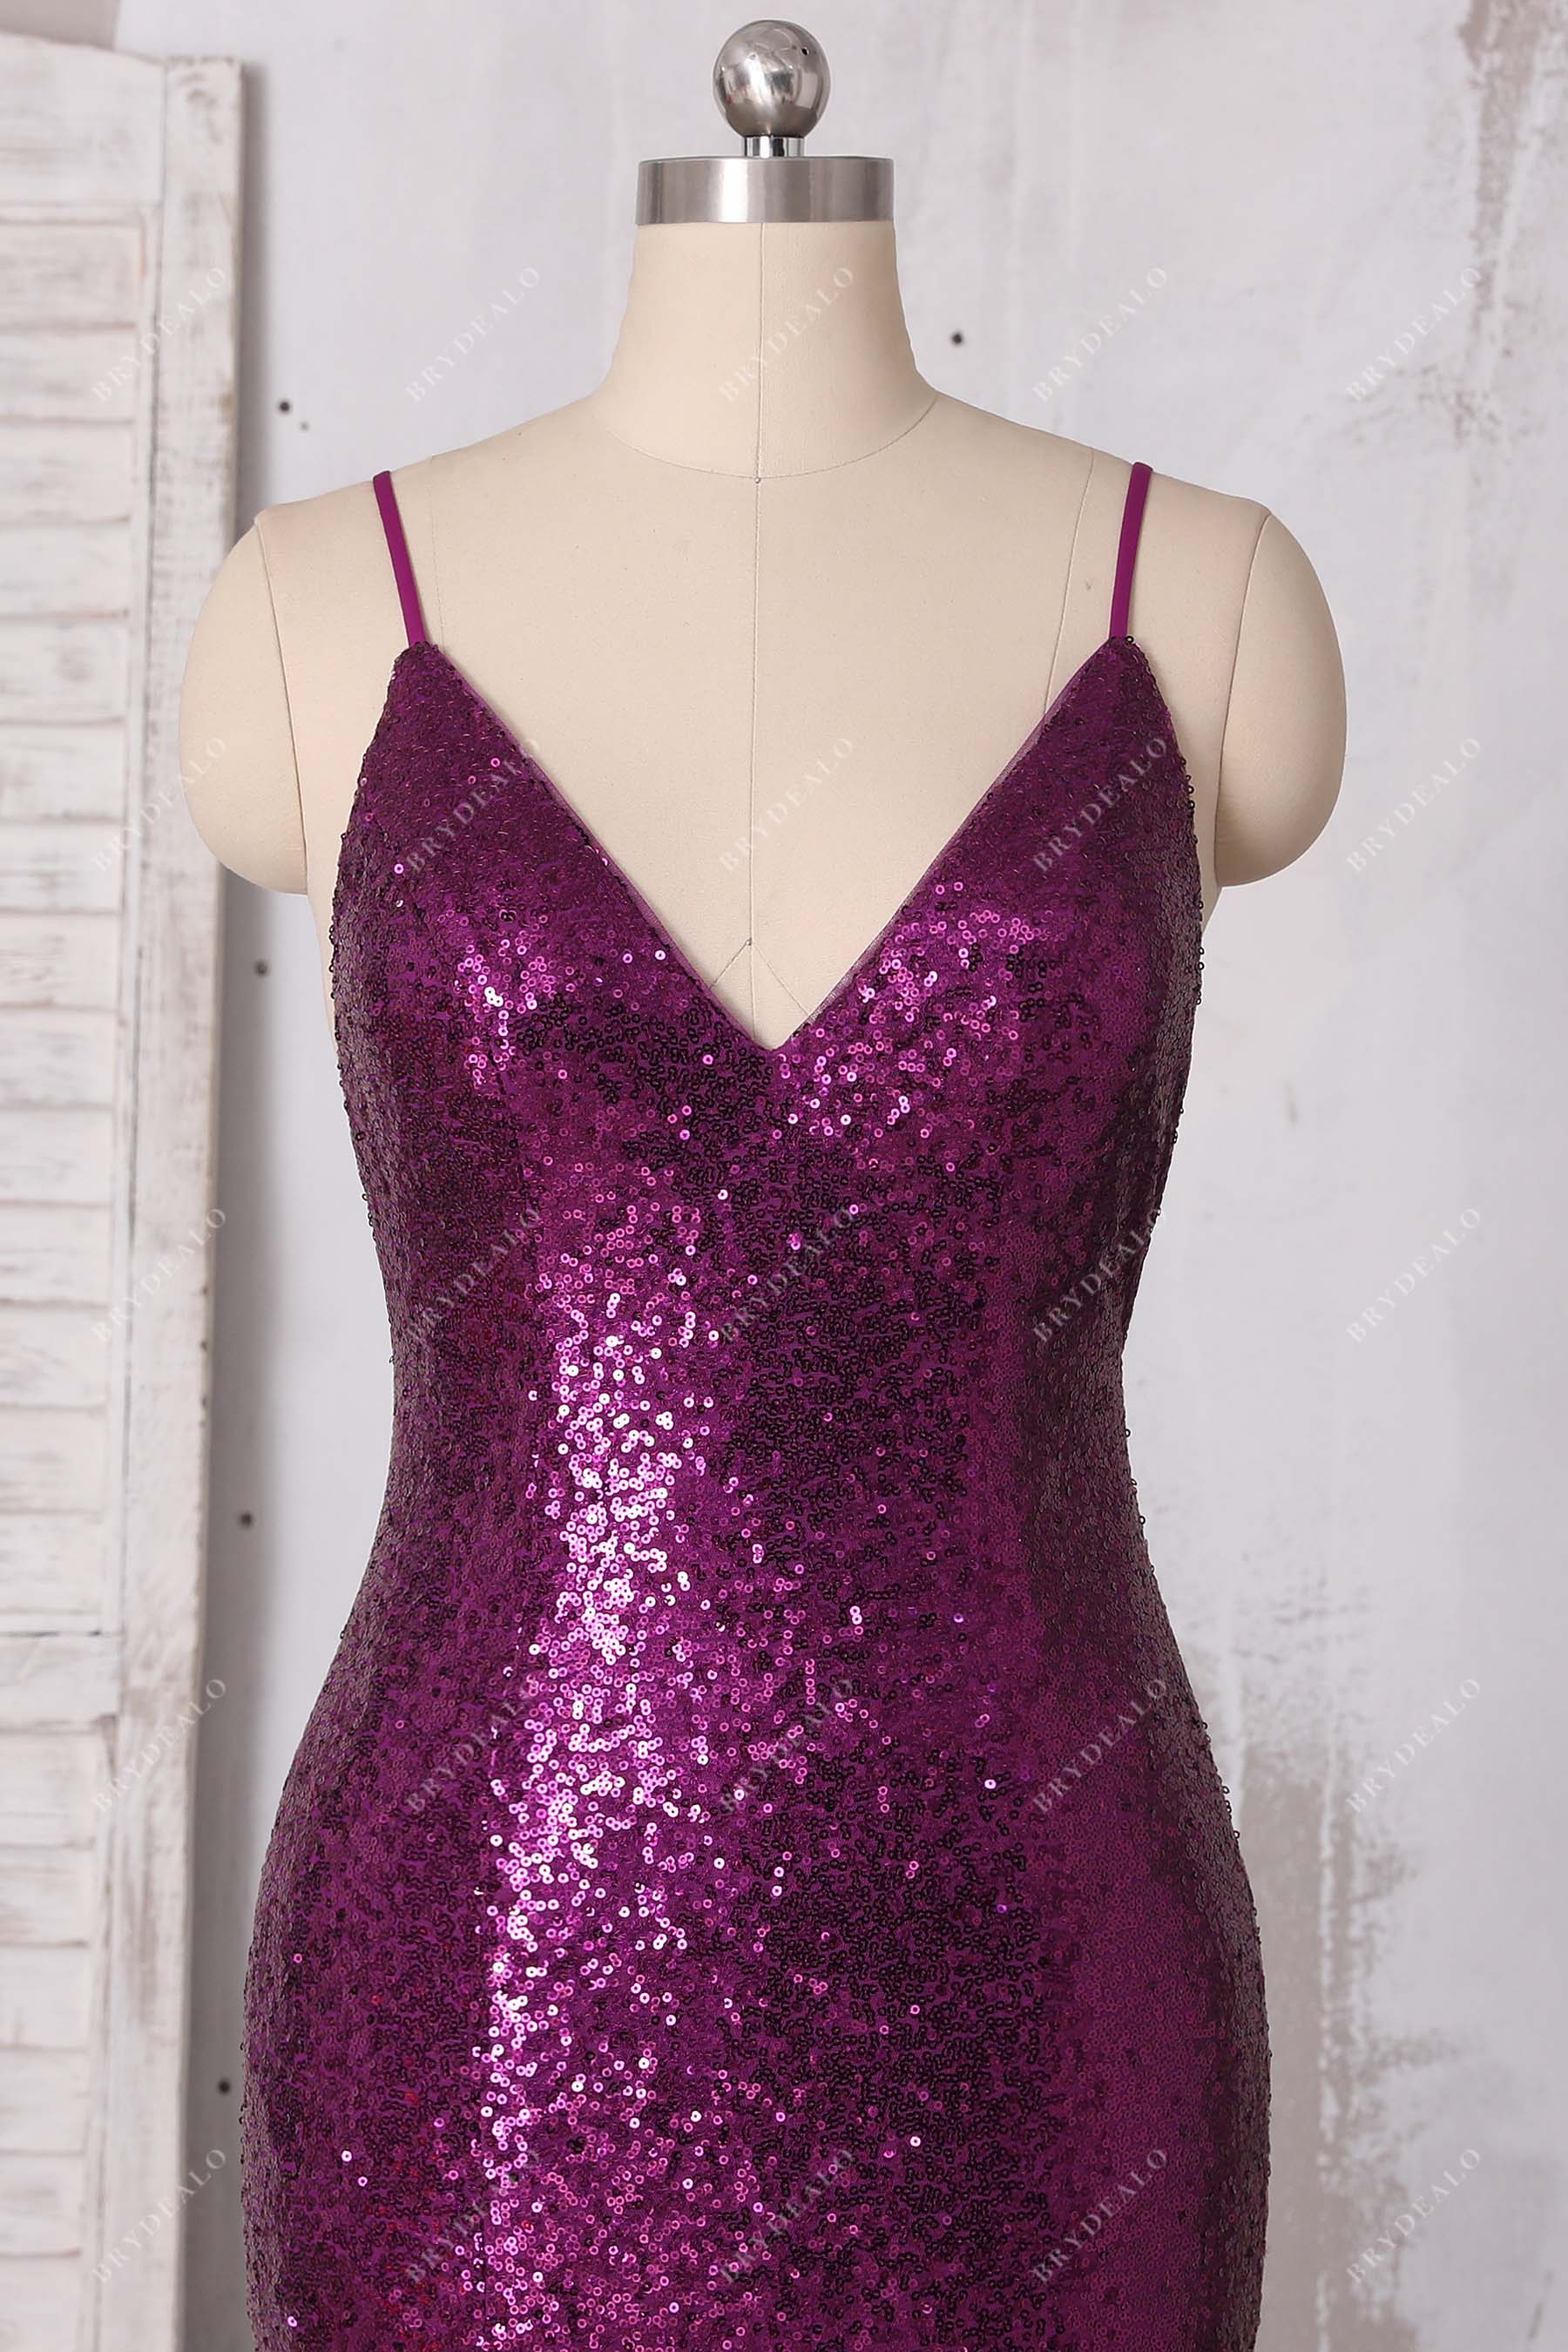 V-neck sparkly fuchsia prom dress